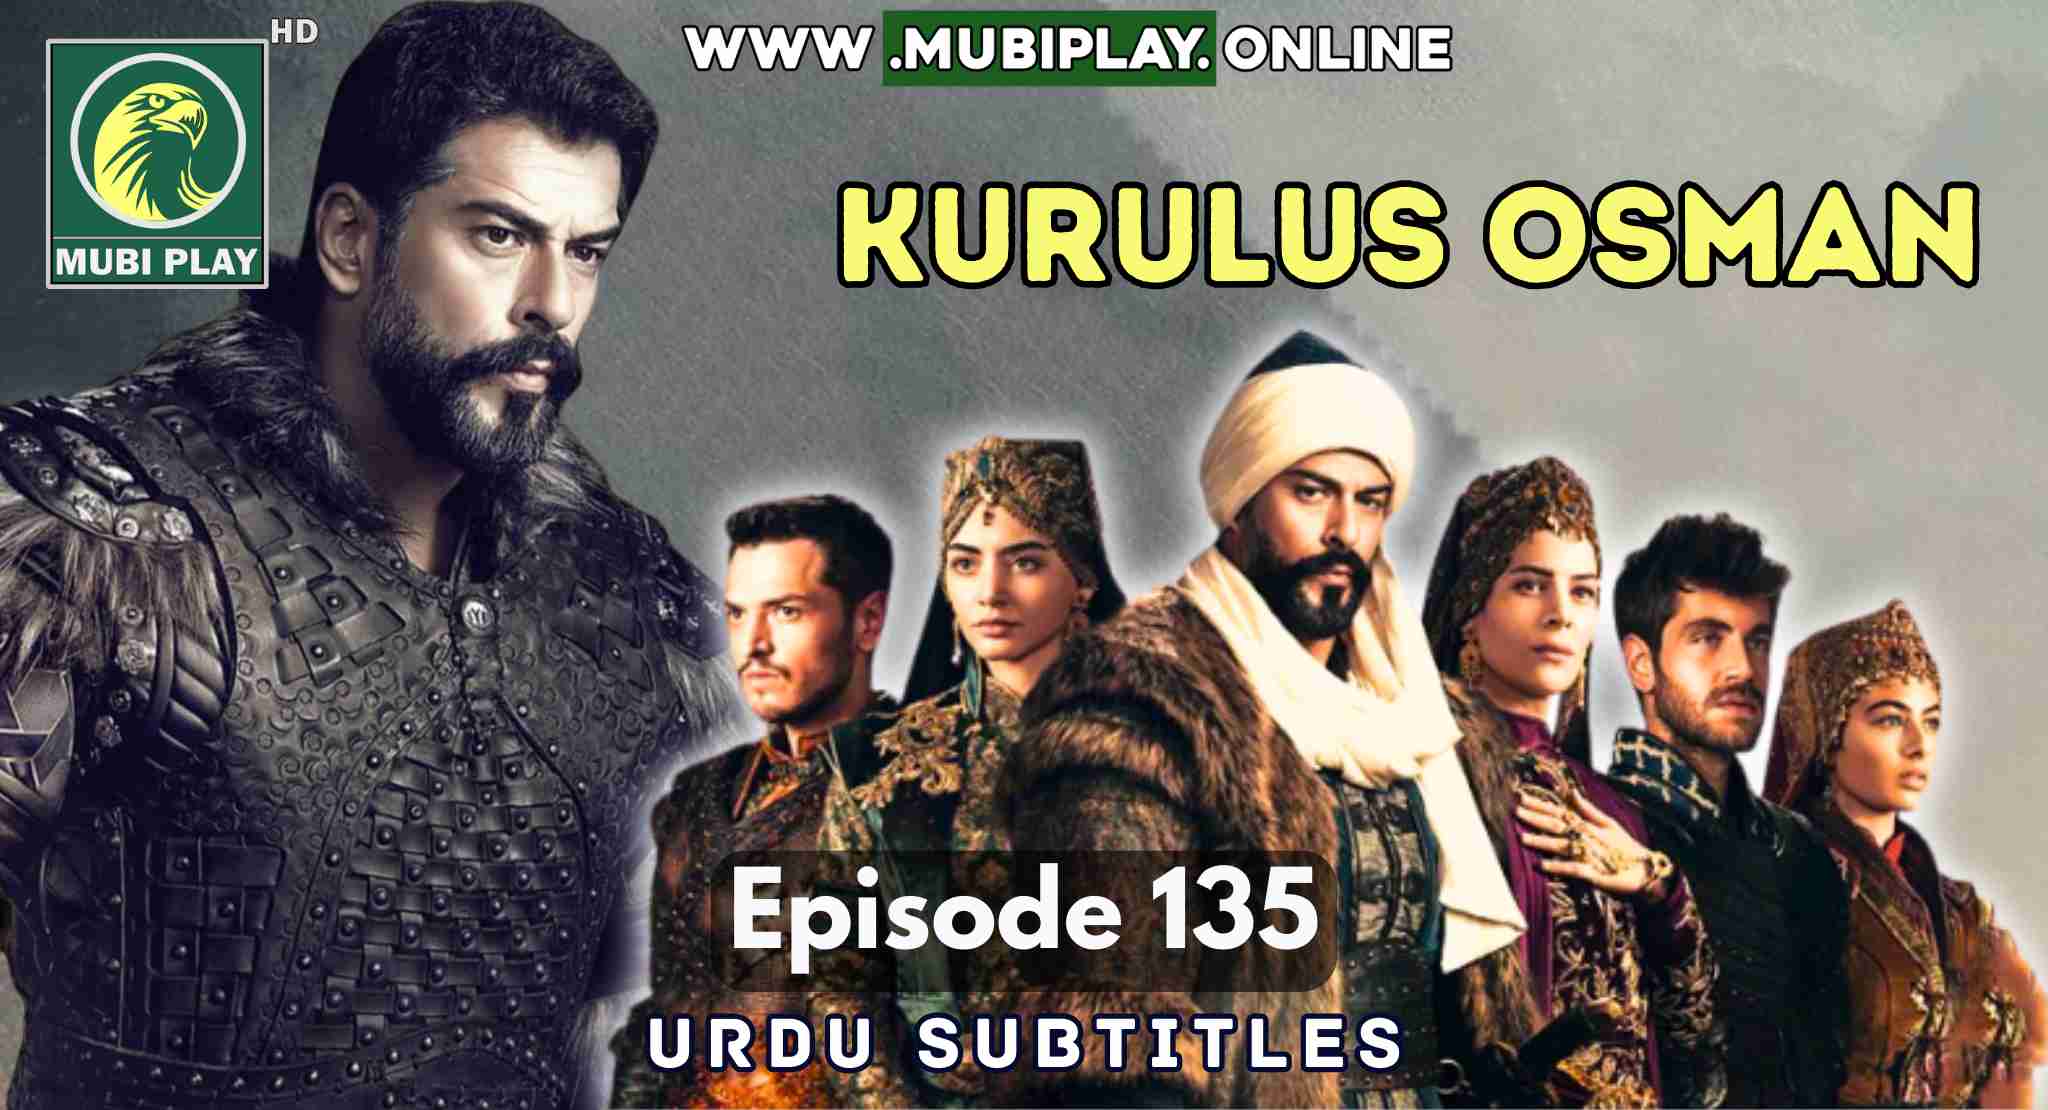 Kurulus Osman Episode 135 with Urdu Subtitles by Mubi Play